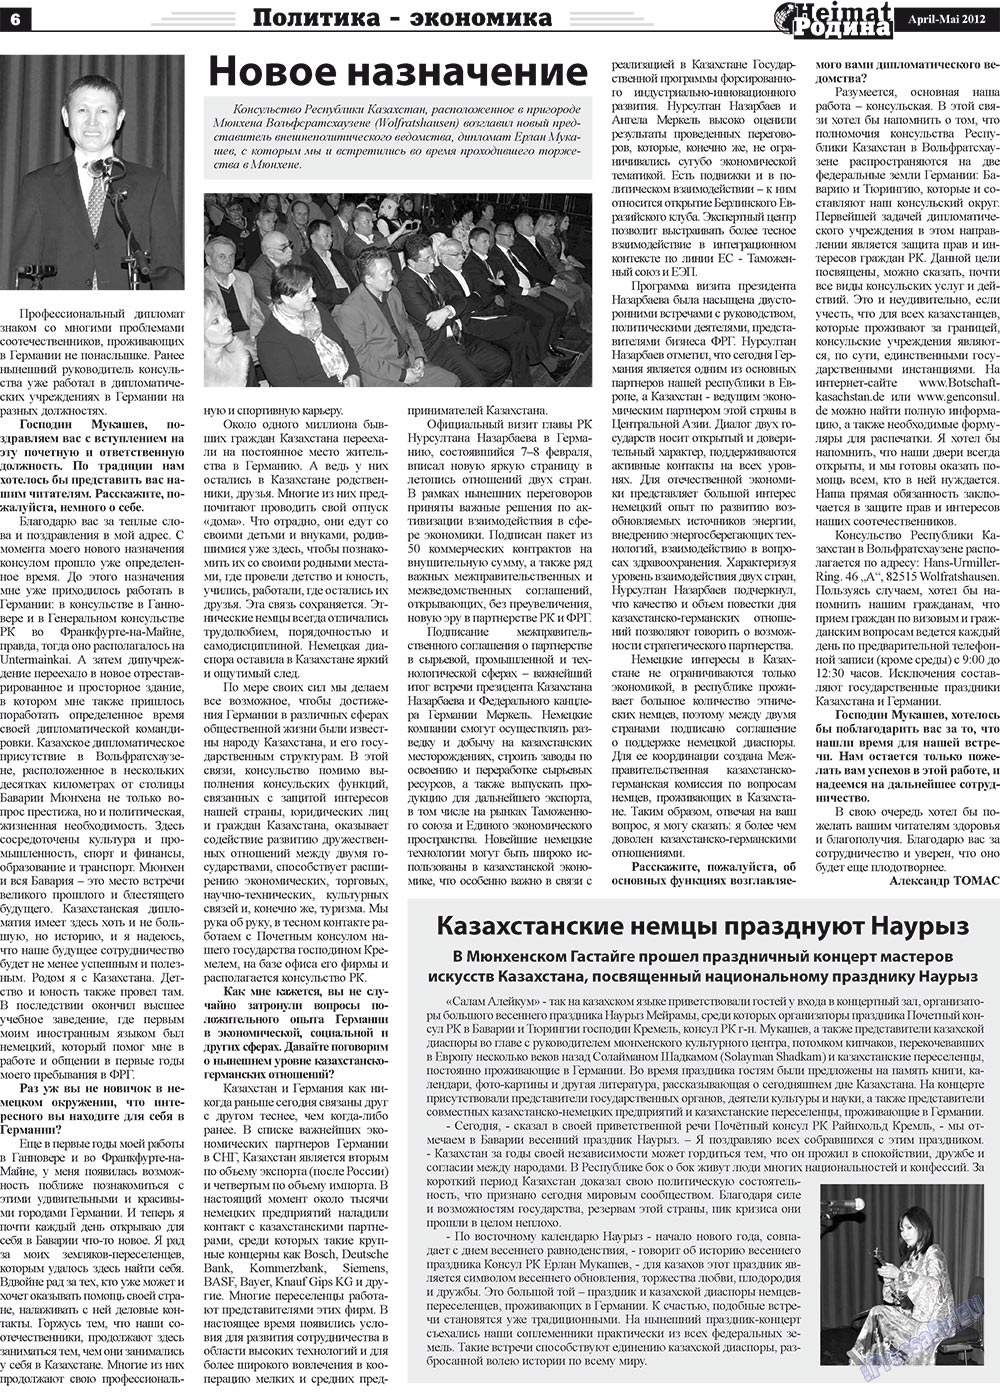 Heimat-Родина, газета. 2012 №4 стр.6